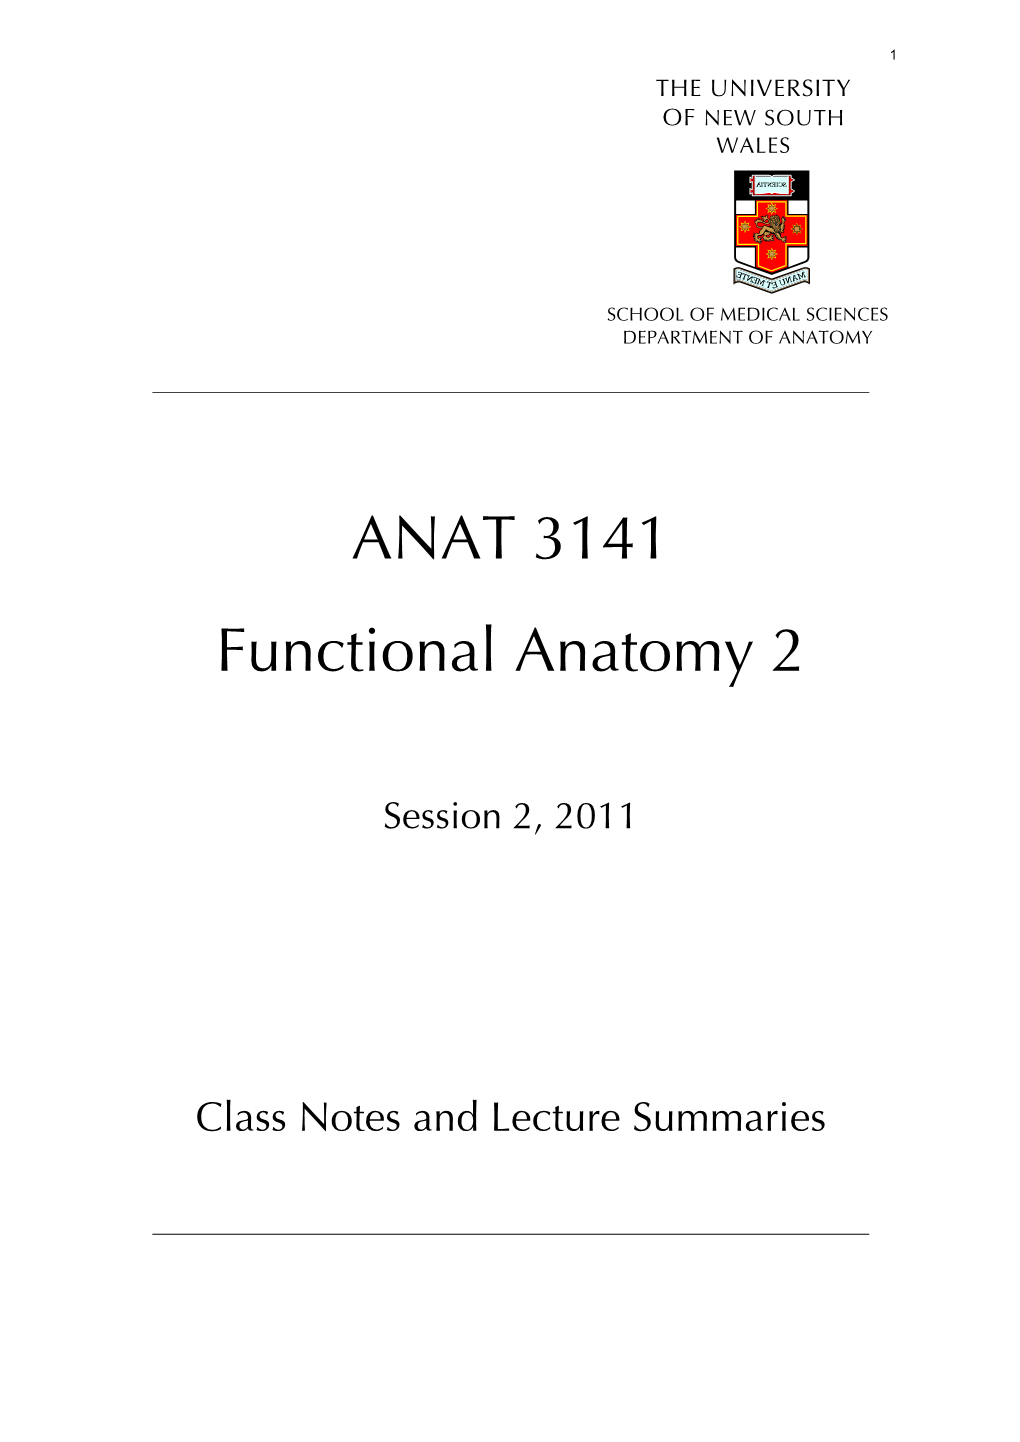 ANAT 3141 Functional Anatomy 2